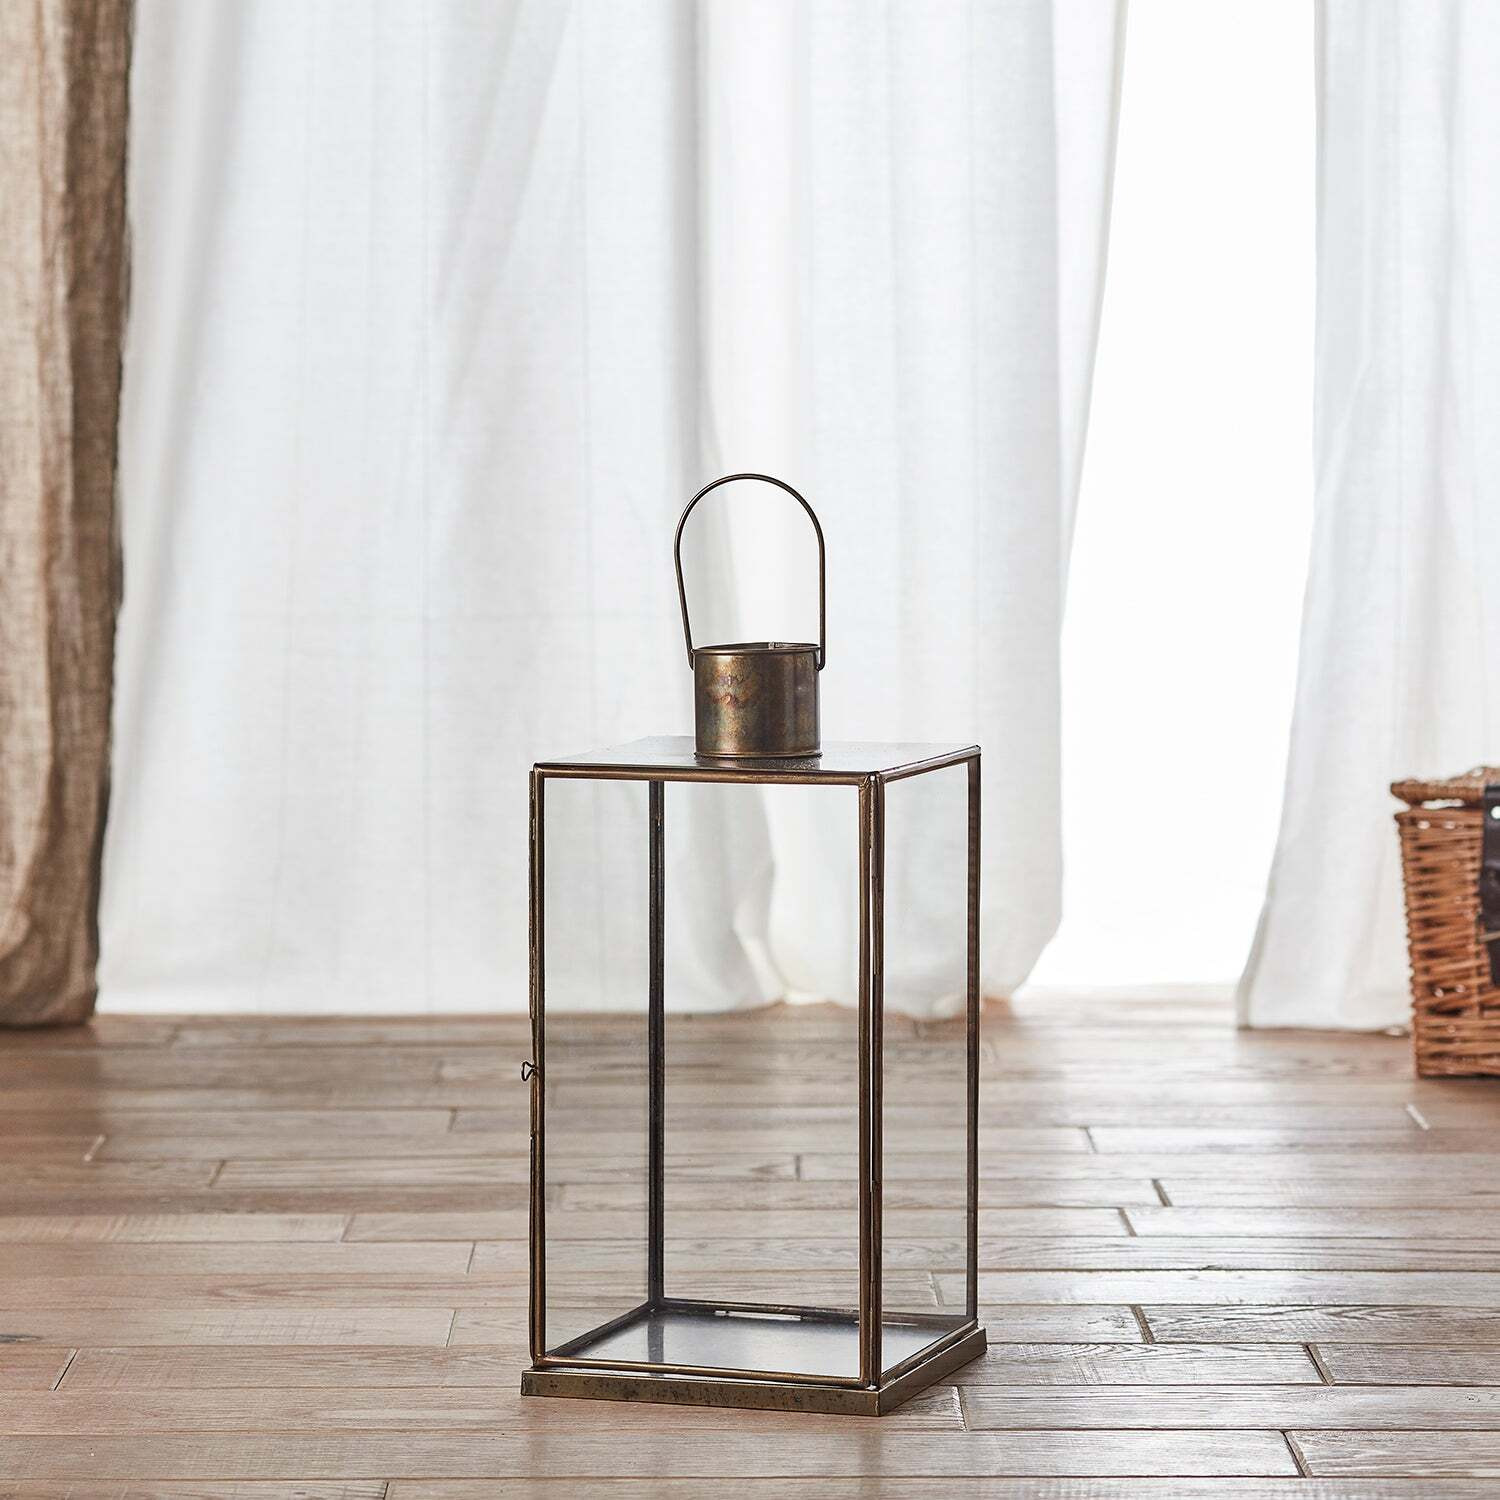 Leif Artisan Glass Lantern - image 1